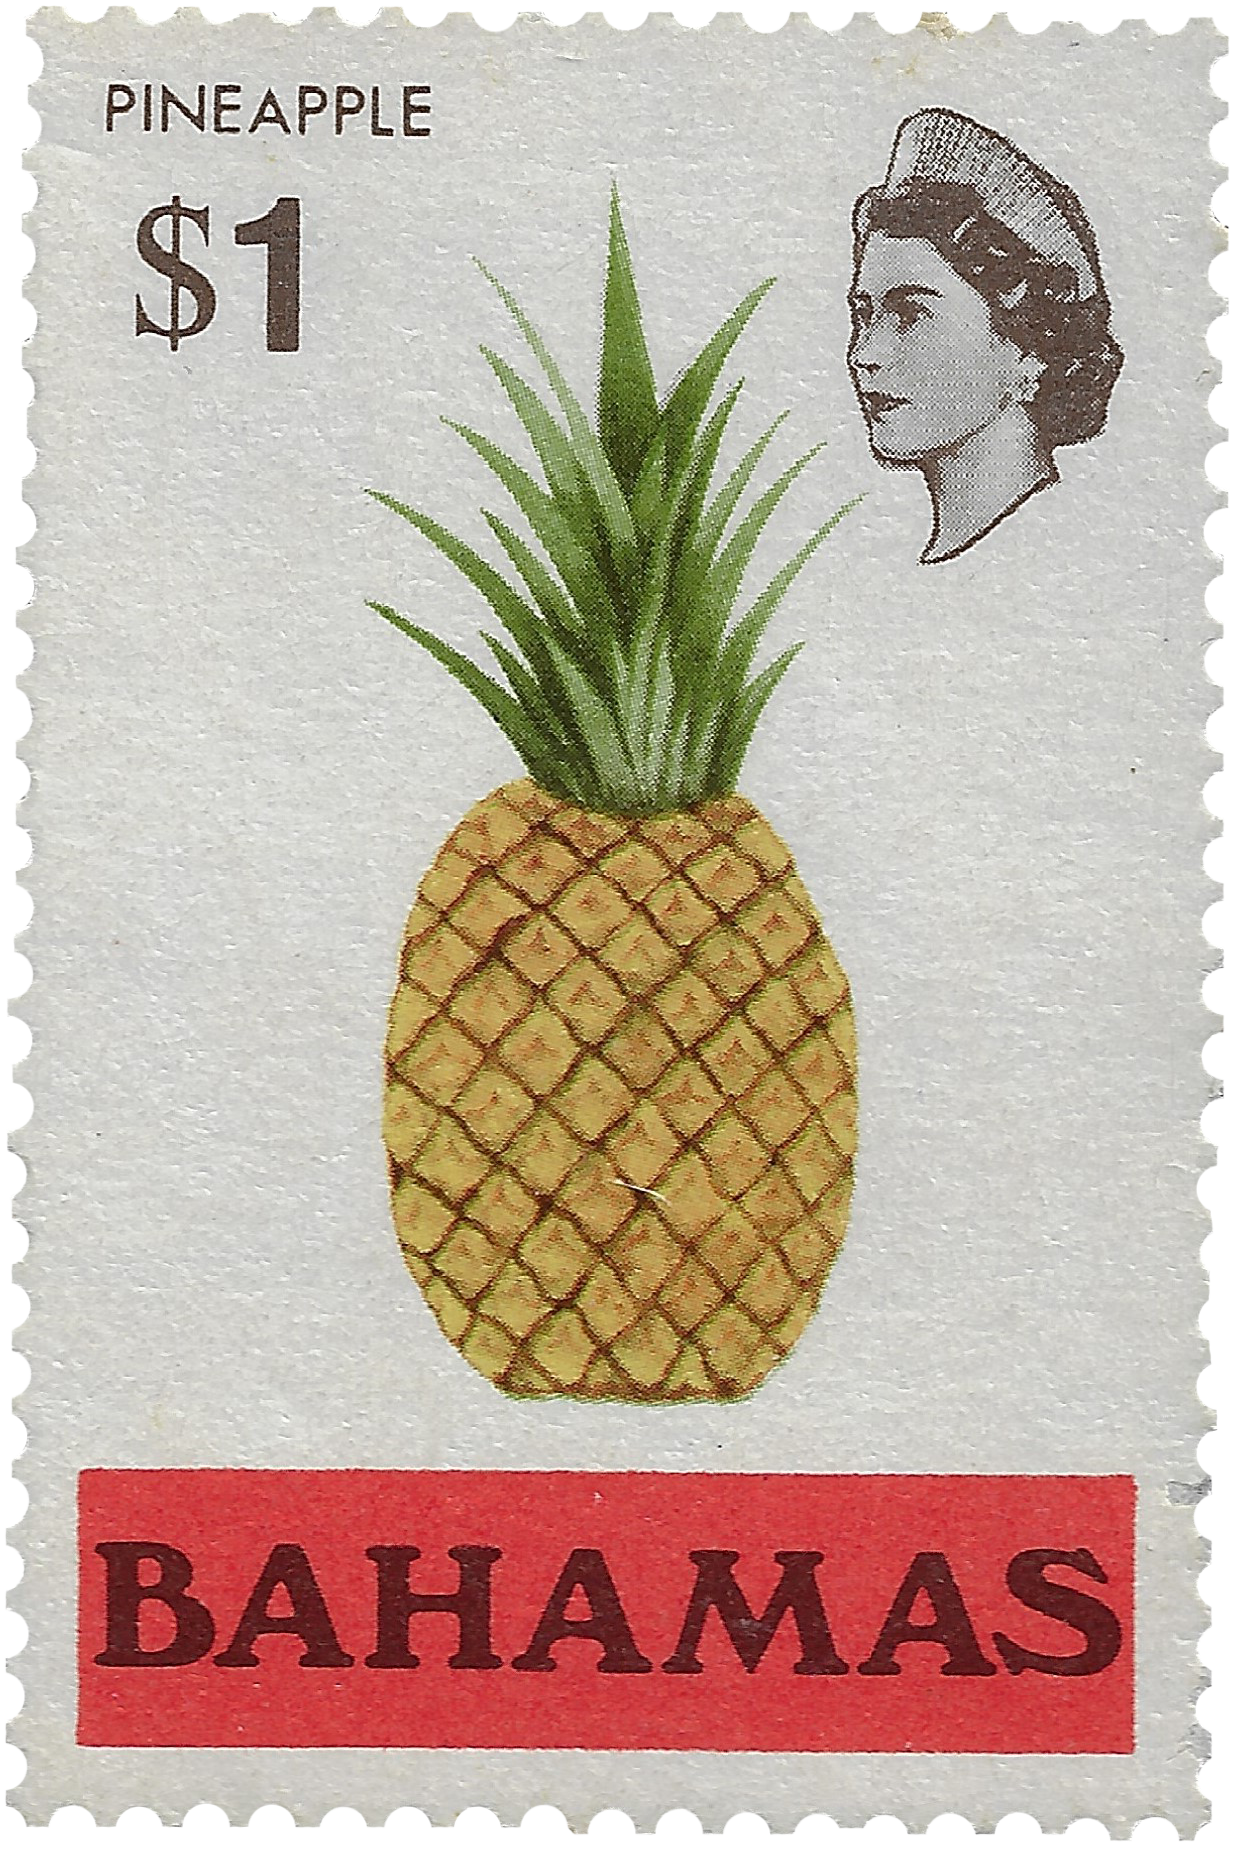 1d 1971, Pineapple